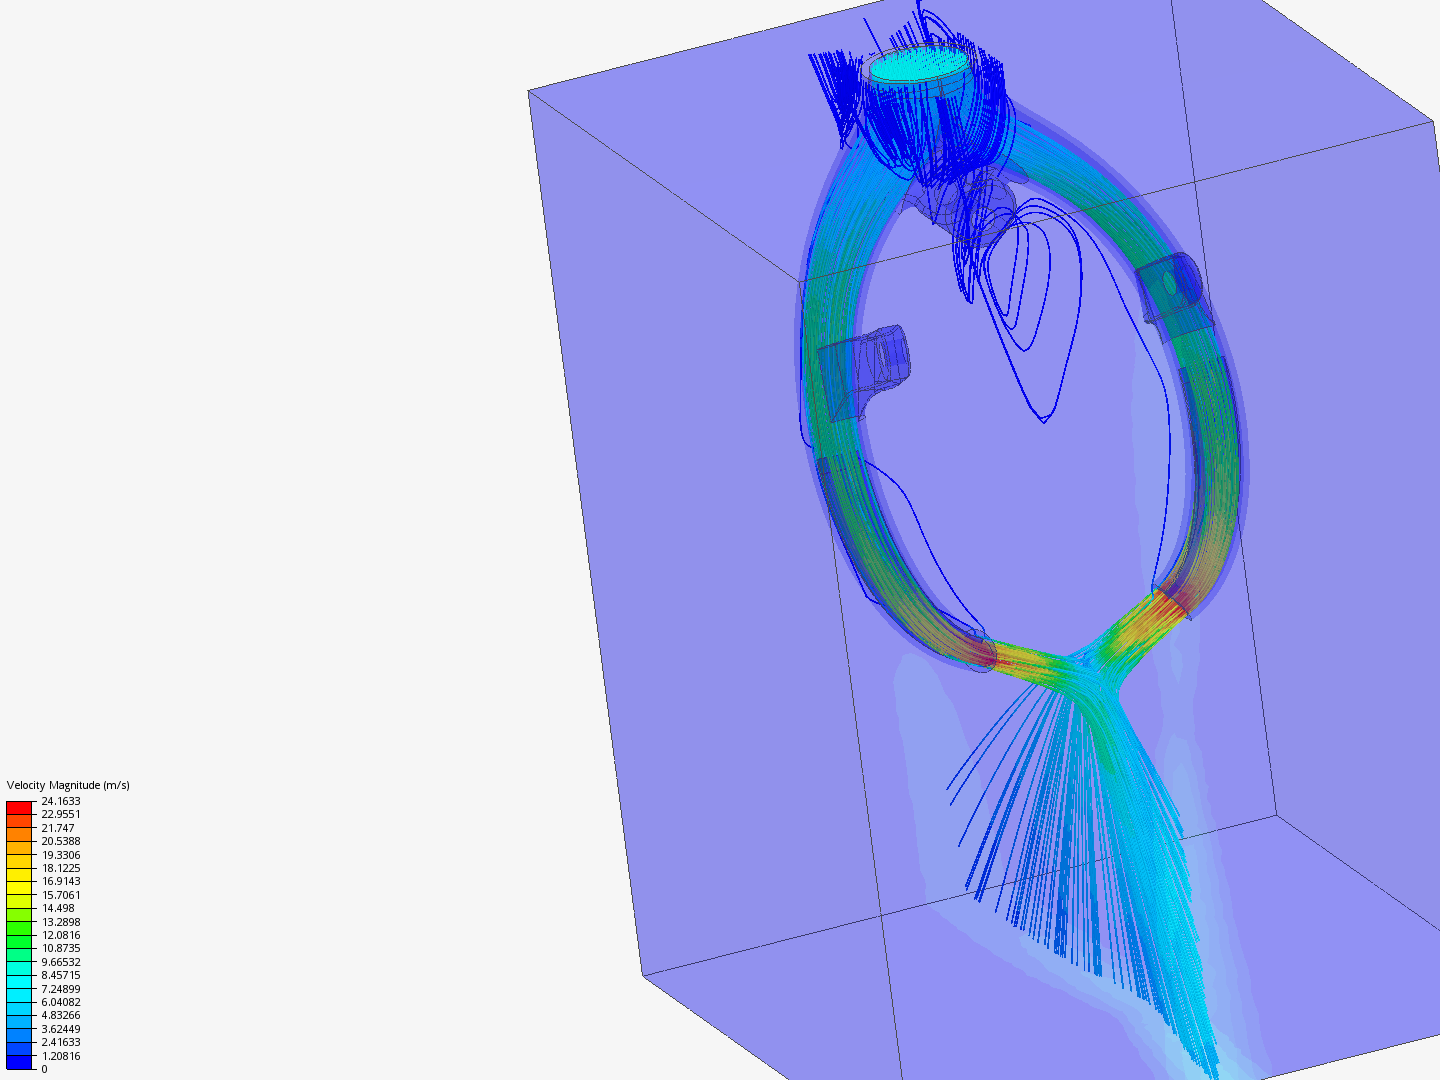 VX_toolhead fan duct simulation image